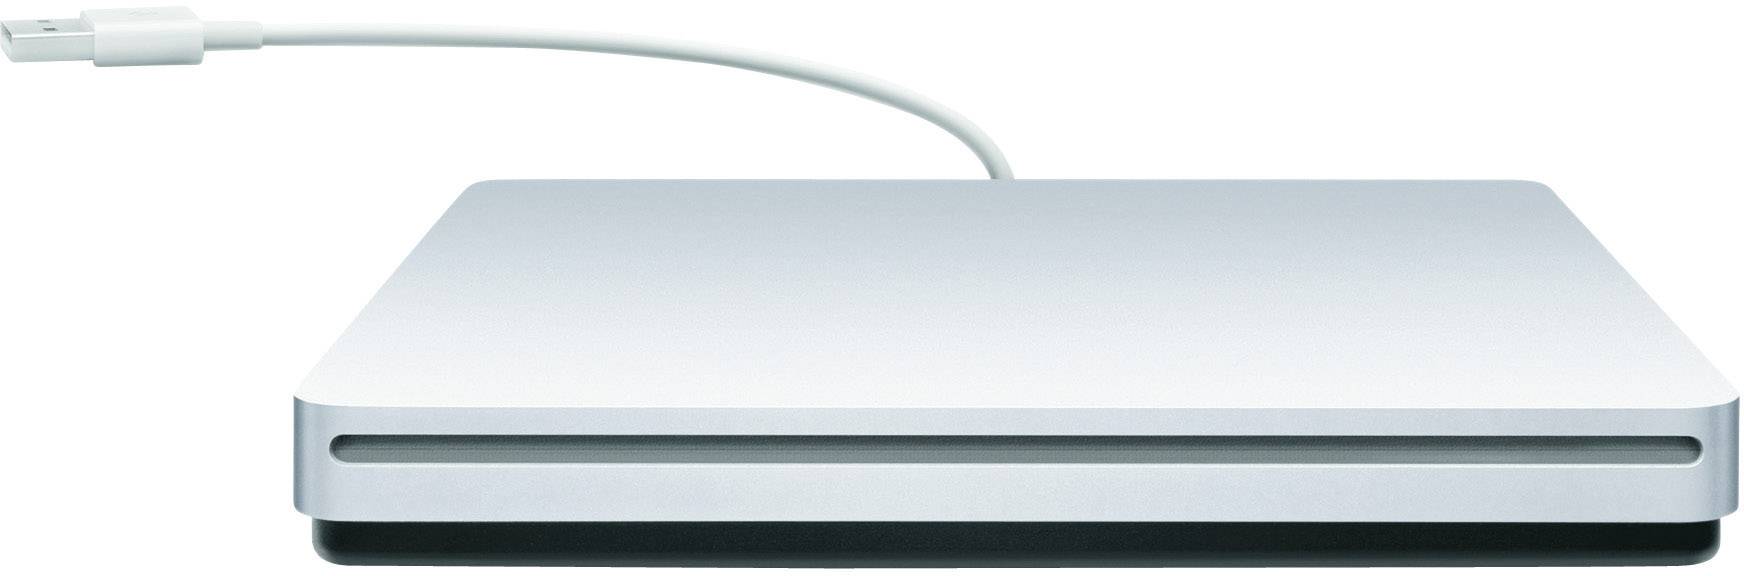 Hurtig Manners kage Apple USB SuperDrive External DVD writer Retail USB 2.0 | Conrad.com